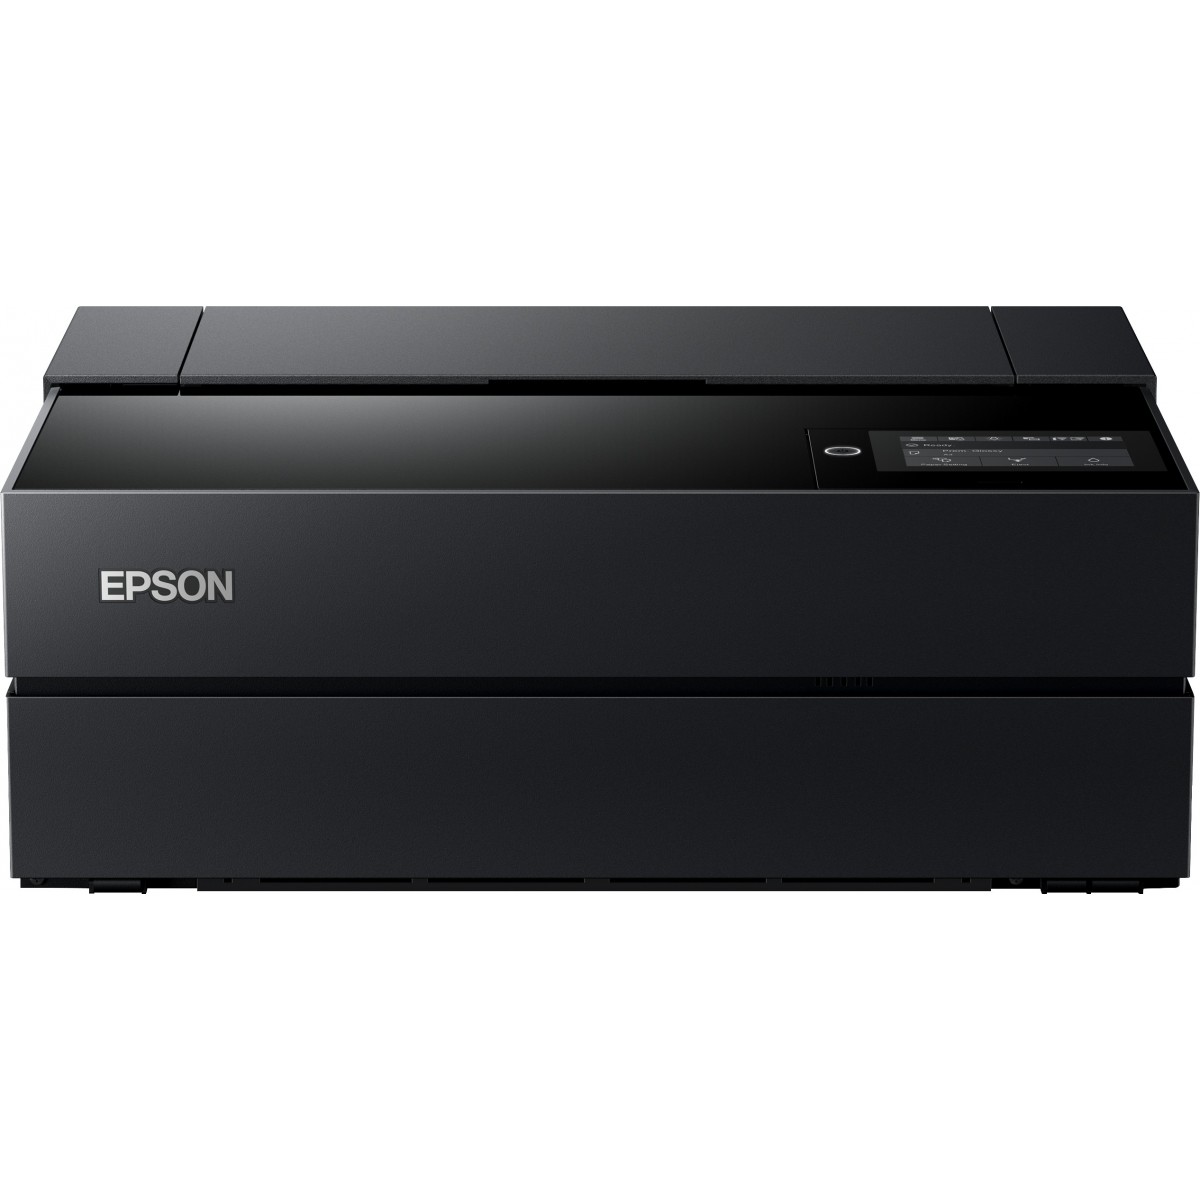 Epson SureColor SC-P700 - Inkjet - 5760 x 1440 DPI - Borderless printing - Duplex printing - Wi-Fi - Black